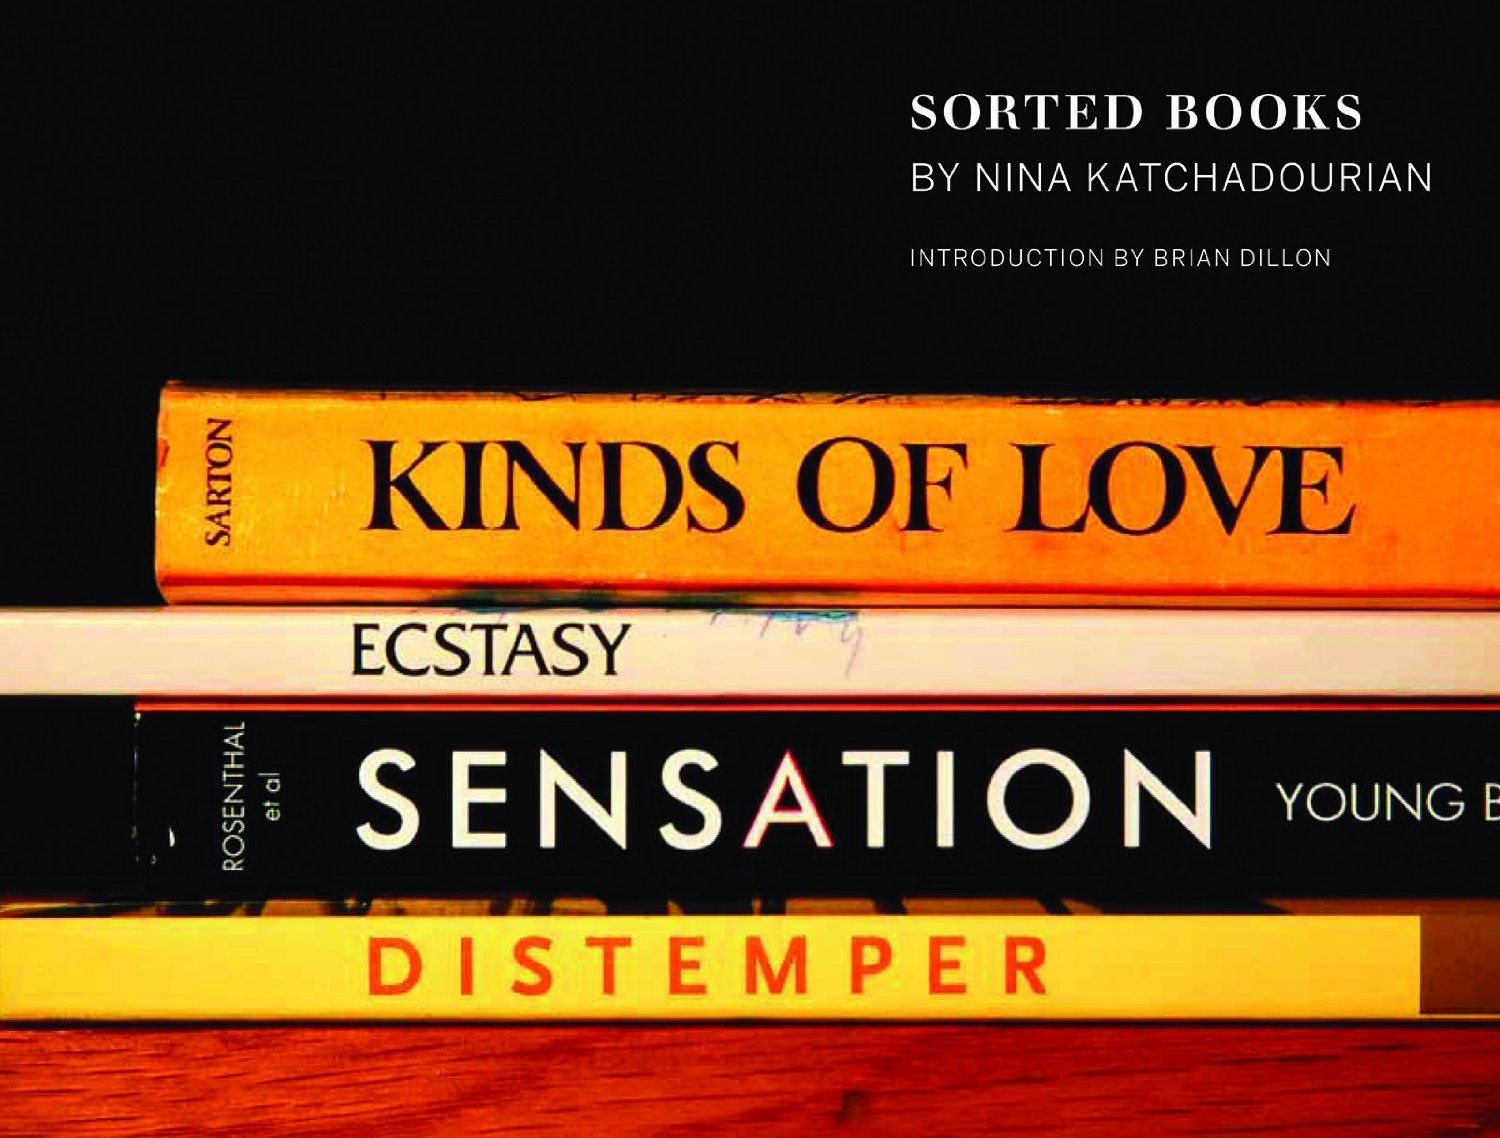 Shelf Expression: Nina Katchadourian’s “Sorted Books”